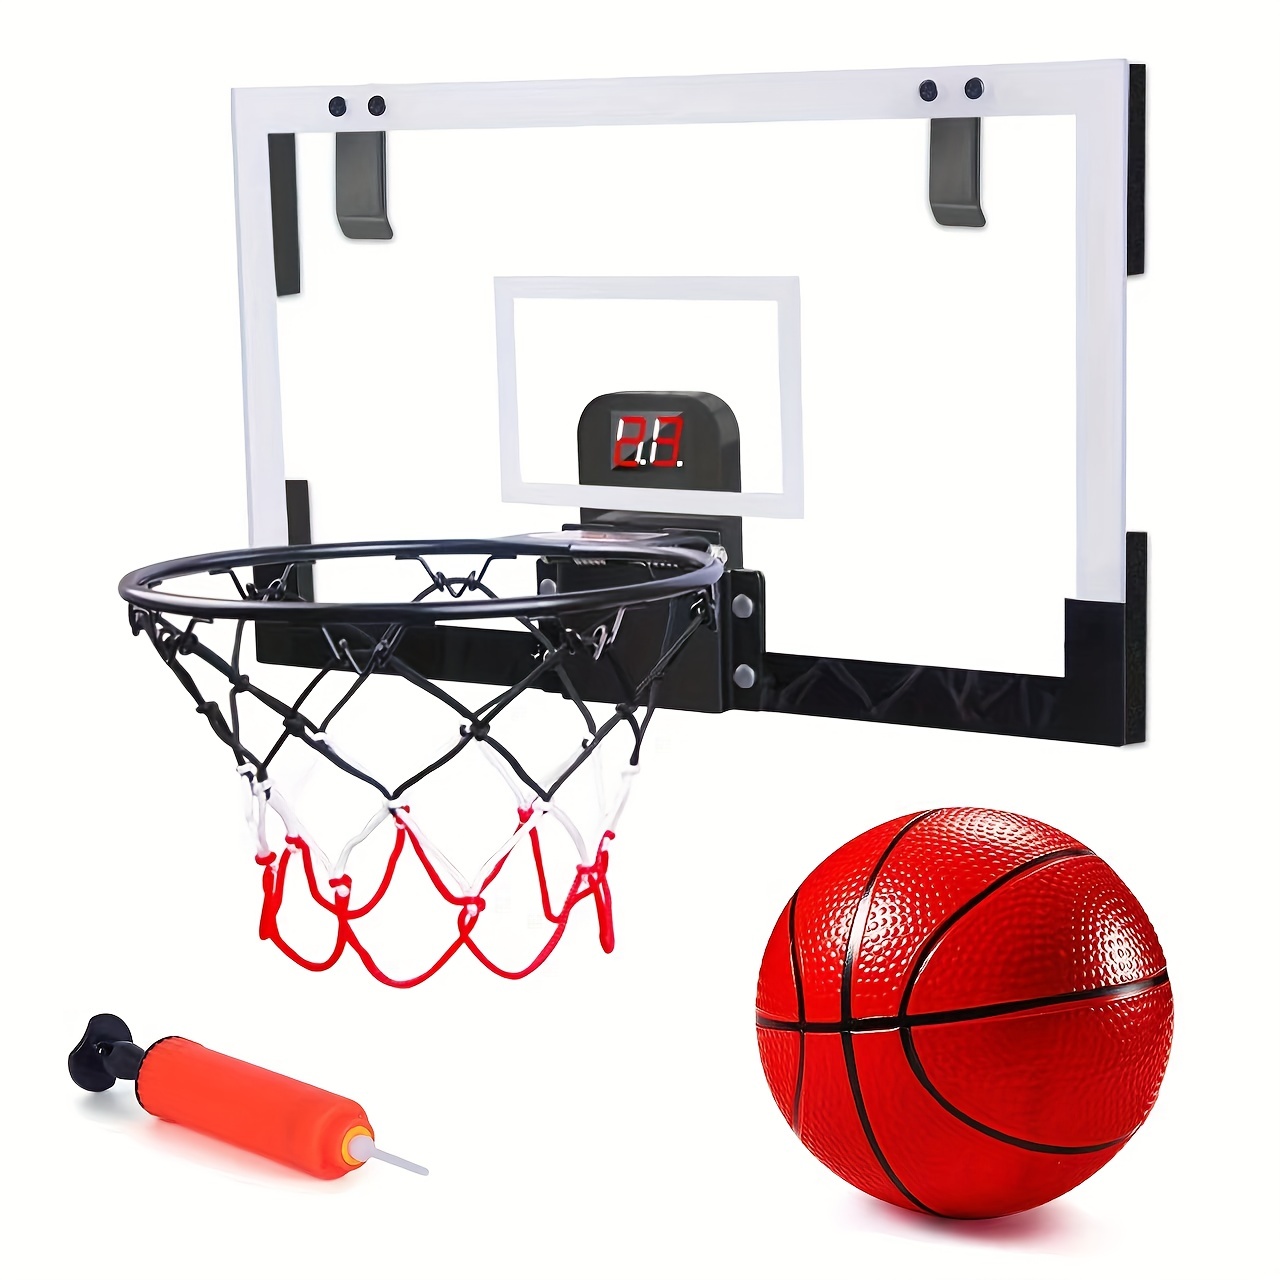 Over The Door Basketball Hoop with Electronic Scoreboard Indoor Basketball Hoop for Kids and Adults Bedroom Basketball Hoop Office Mini Hoop